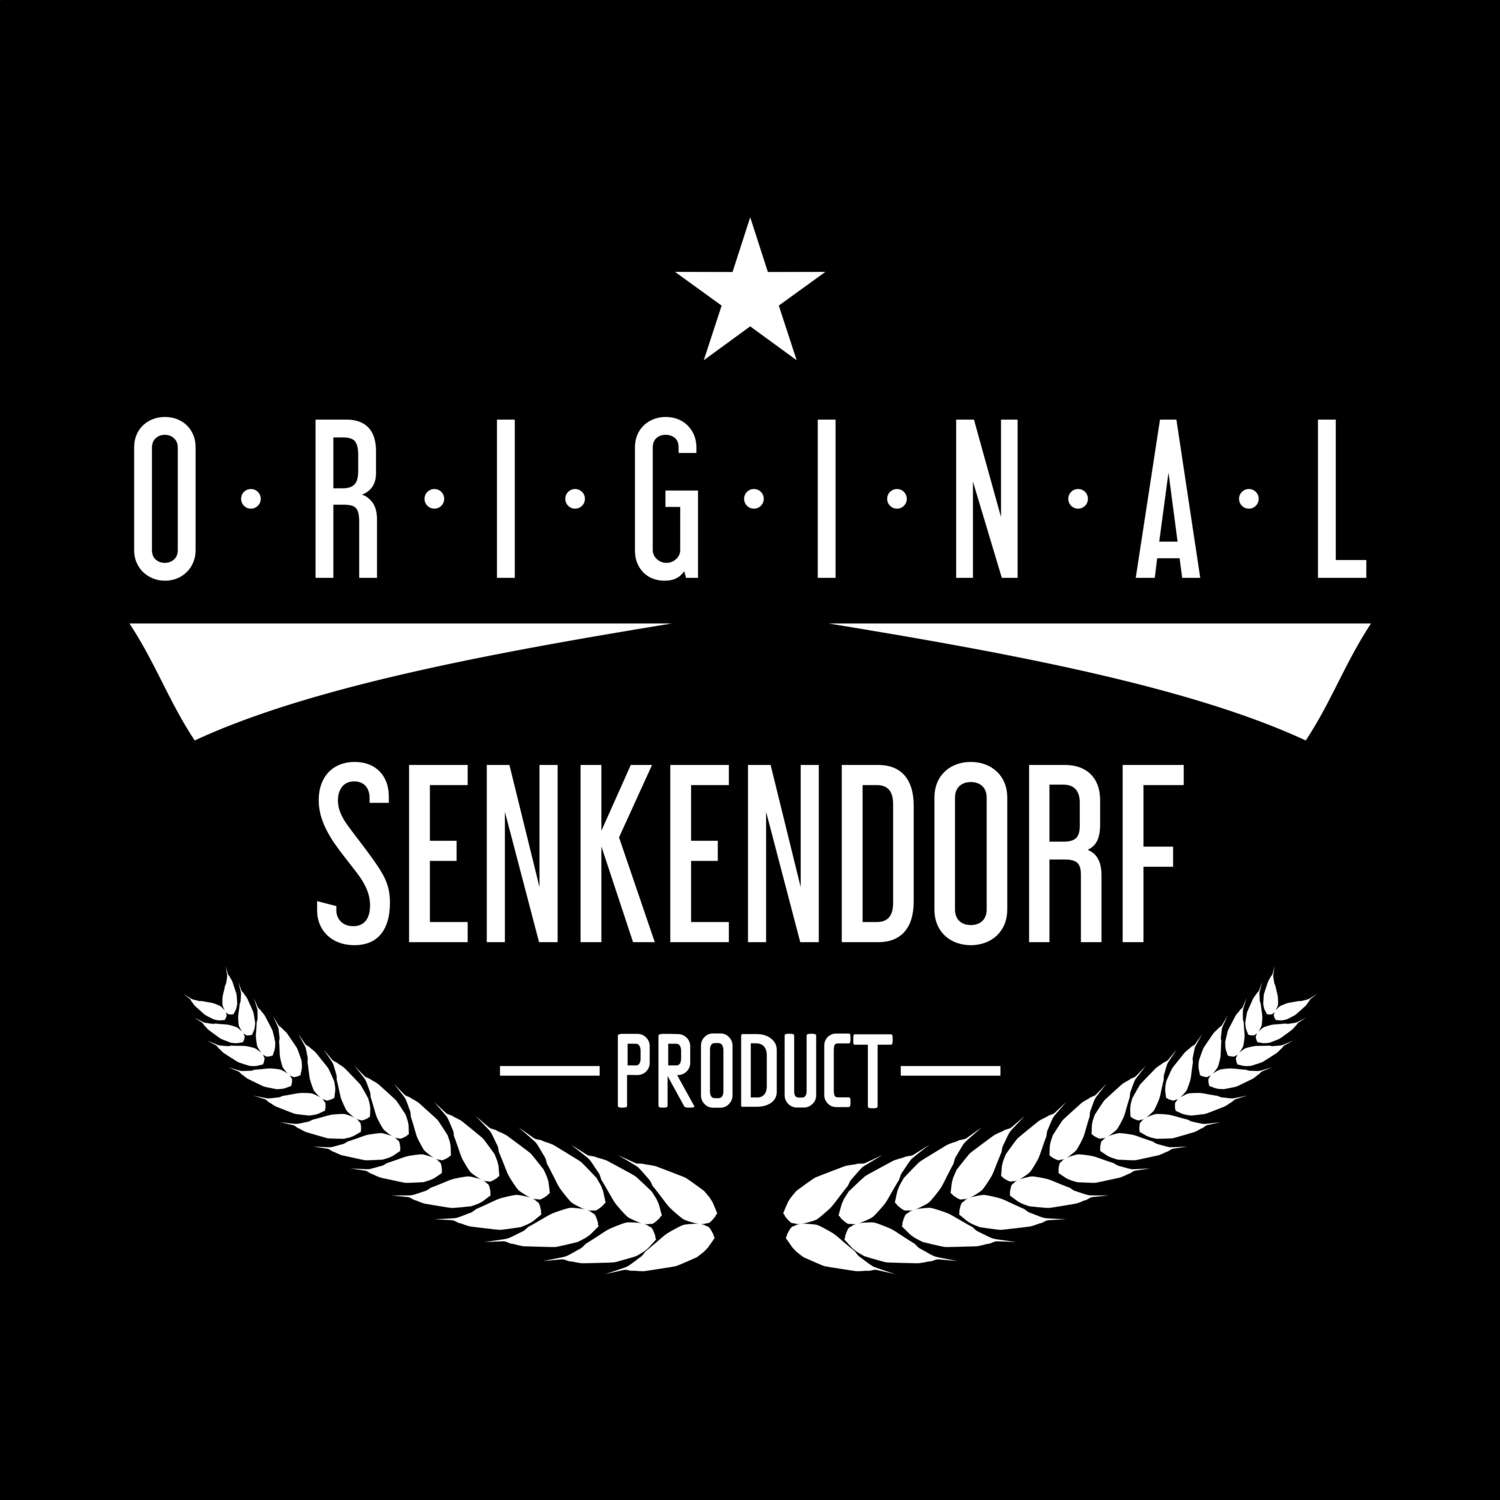 Senkendorf T-Shirt »Original Product«